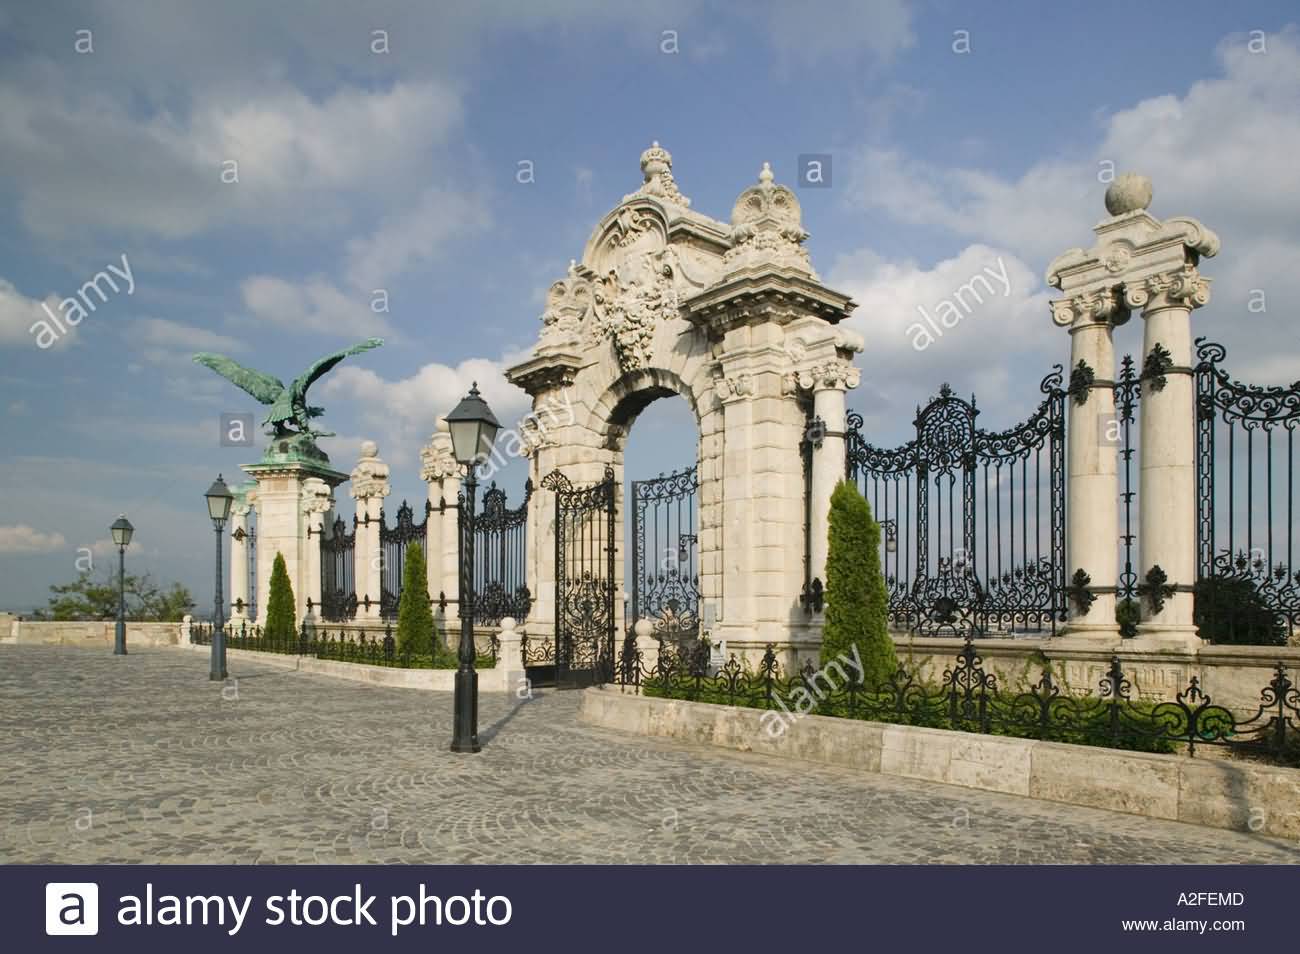 The Corvinus Gate Of The Buda Castle